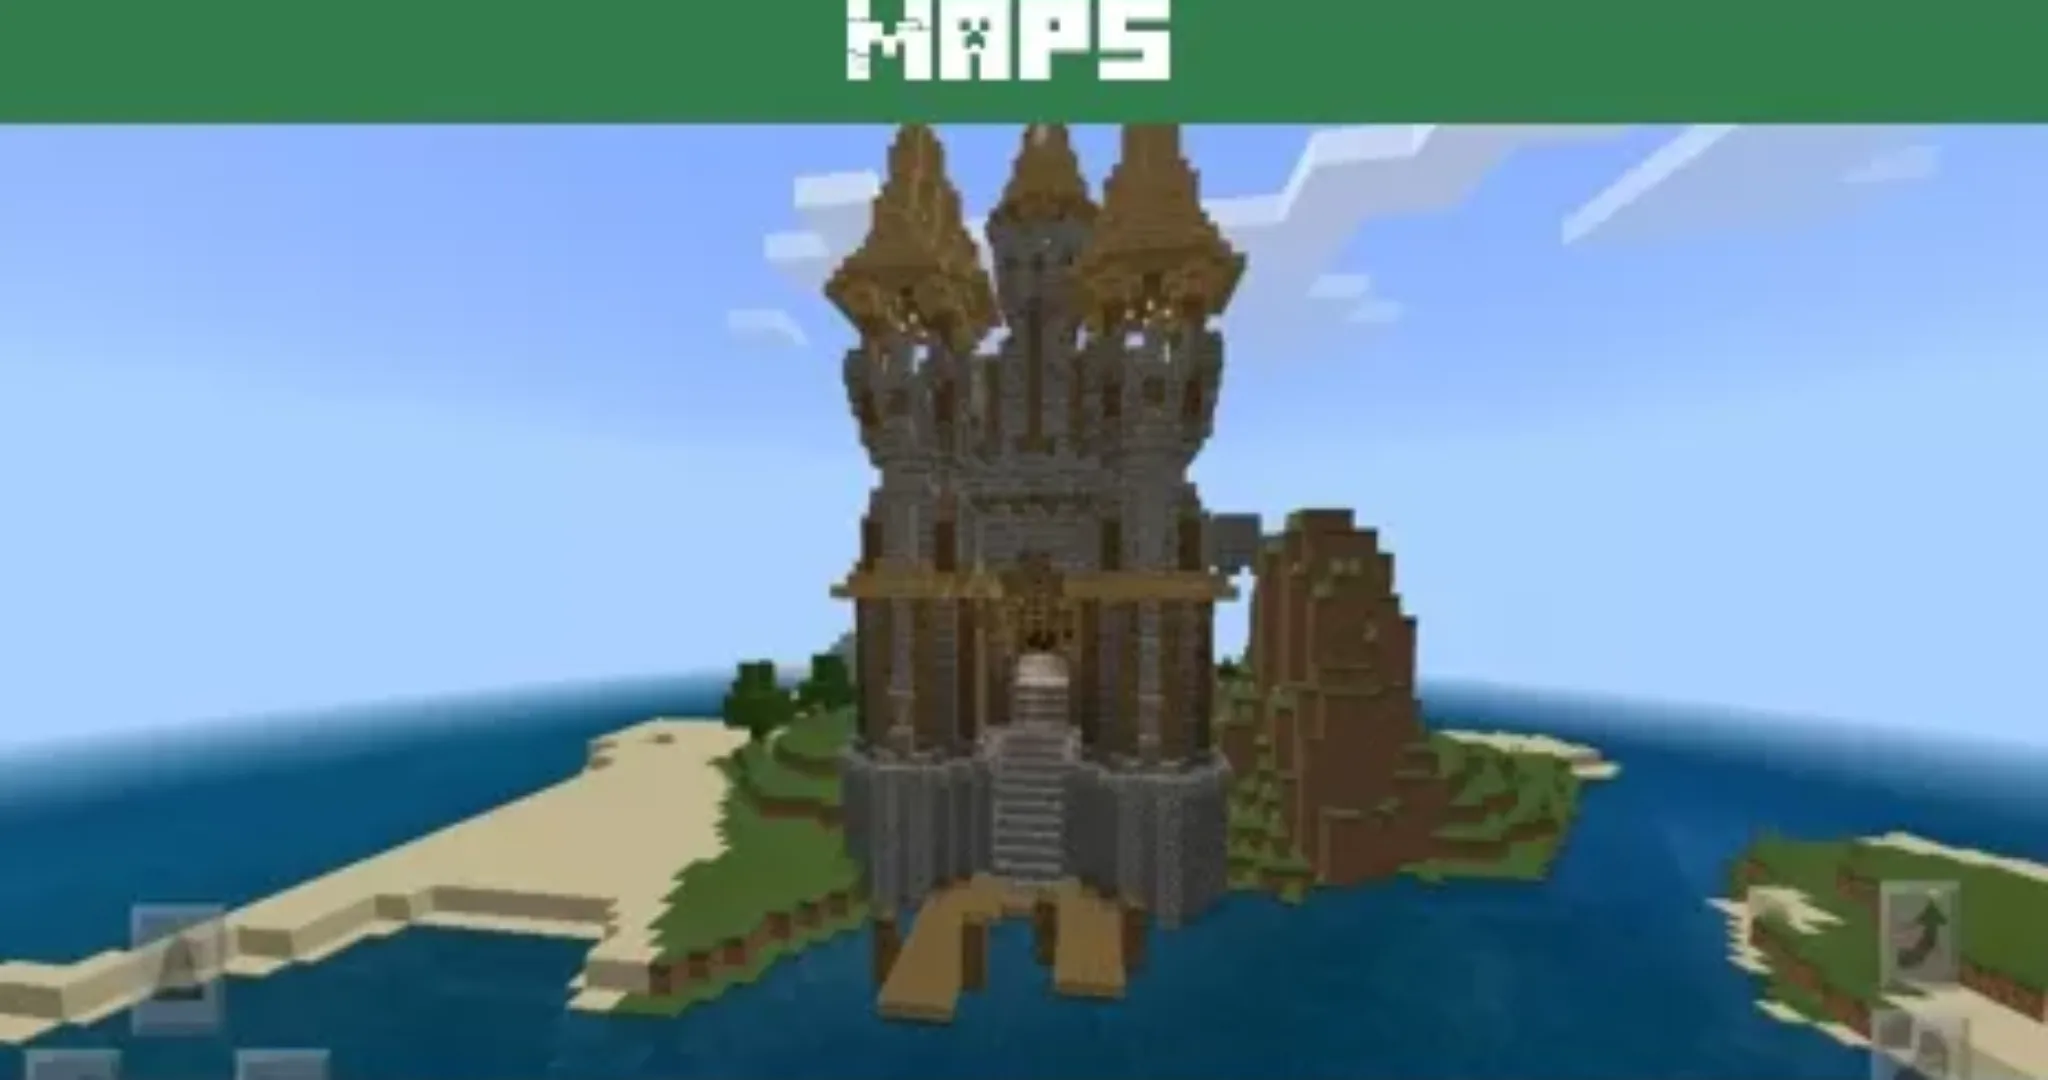 Island Castle Map for Minecraft PE